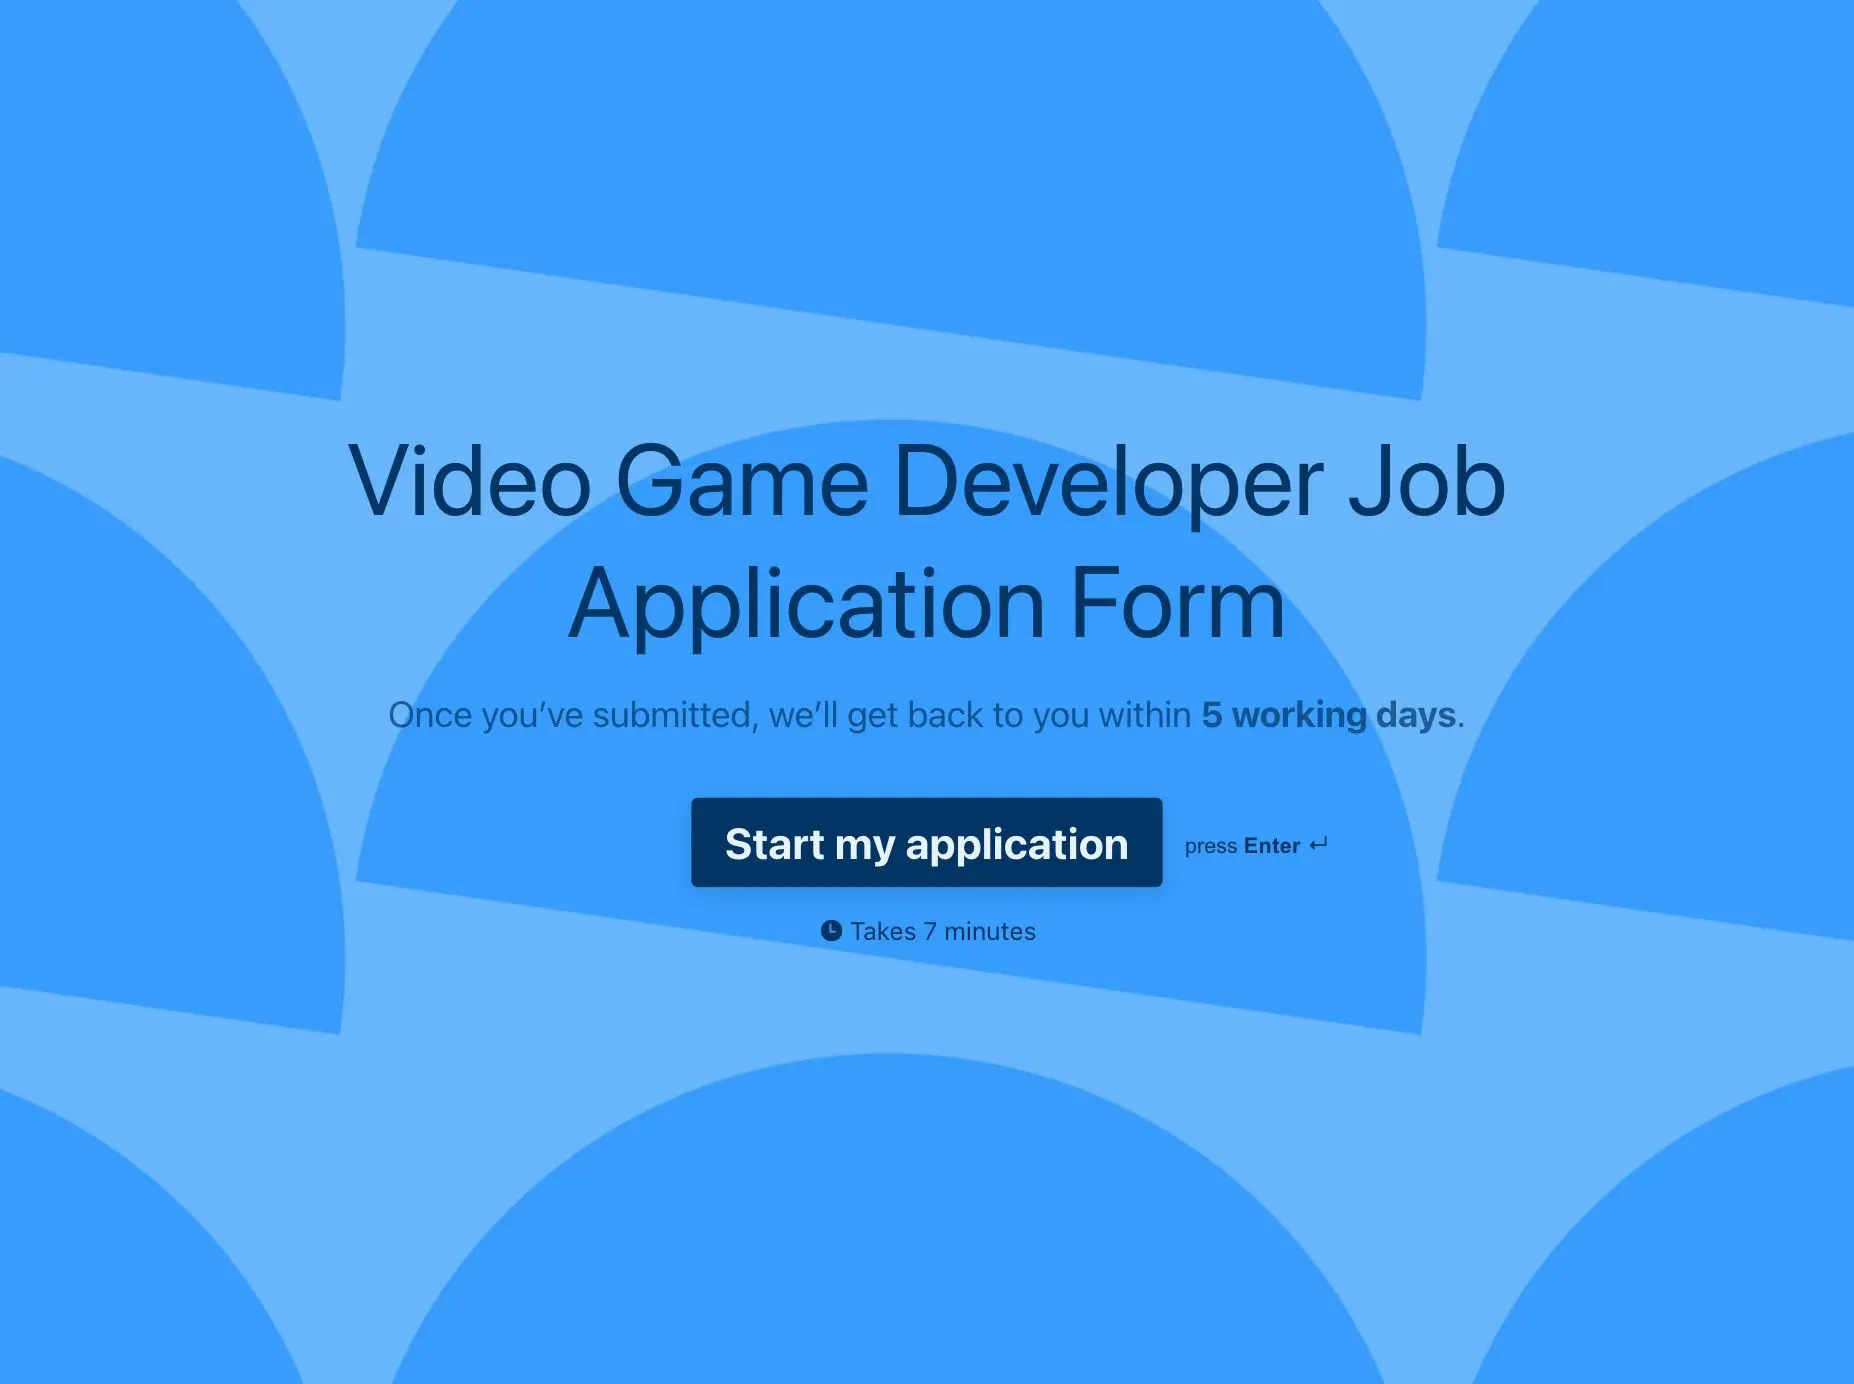 Game Developer job description template